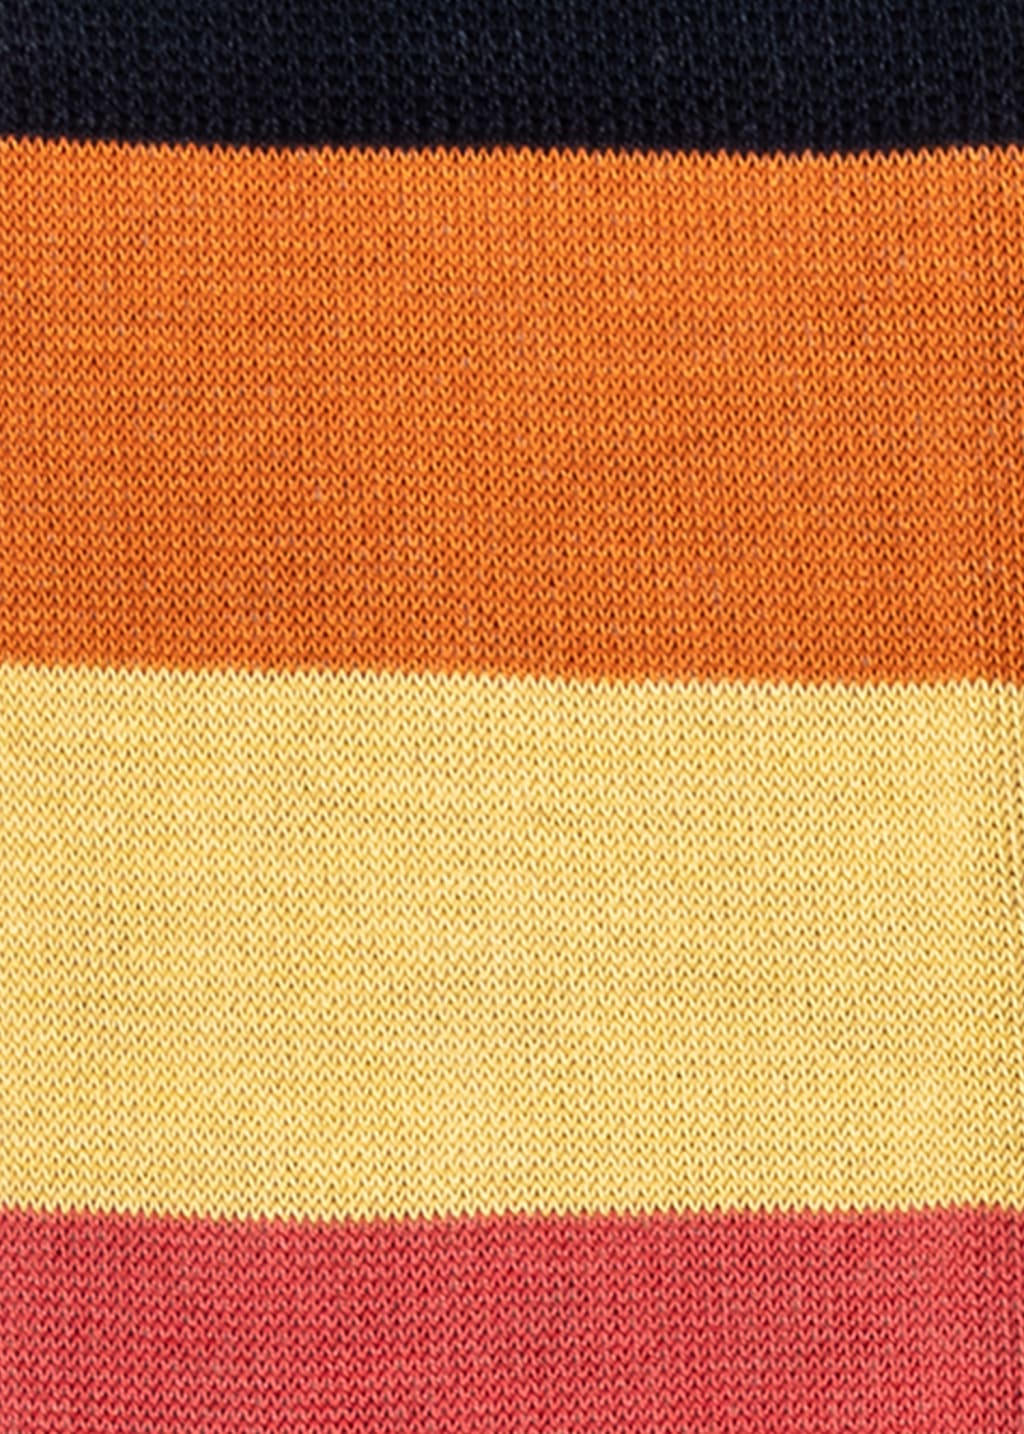 Detail View - Stripe Socks Three Pack Paul Smith